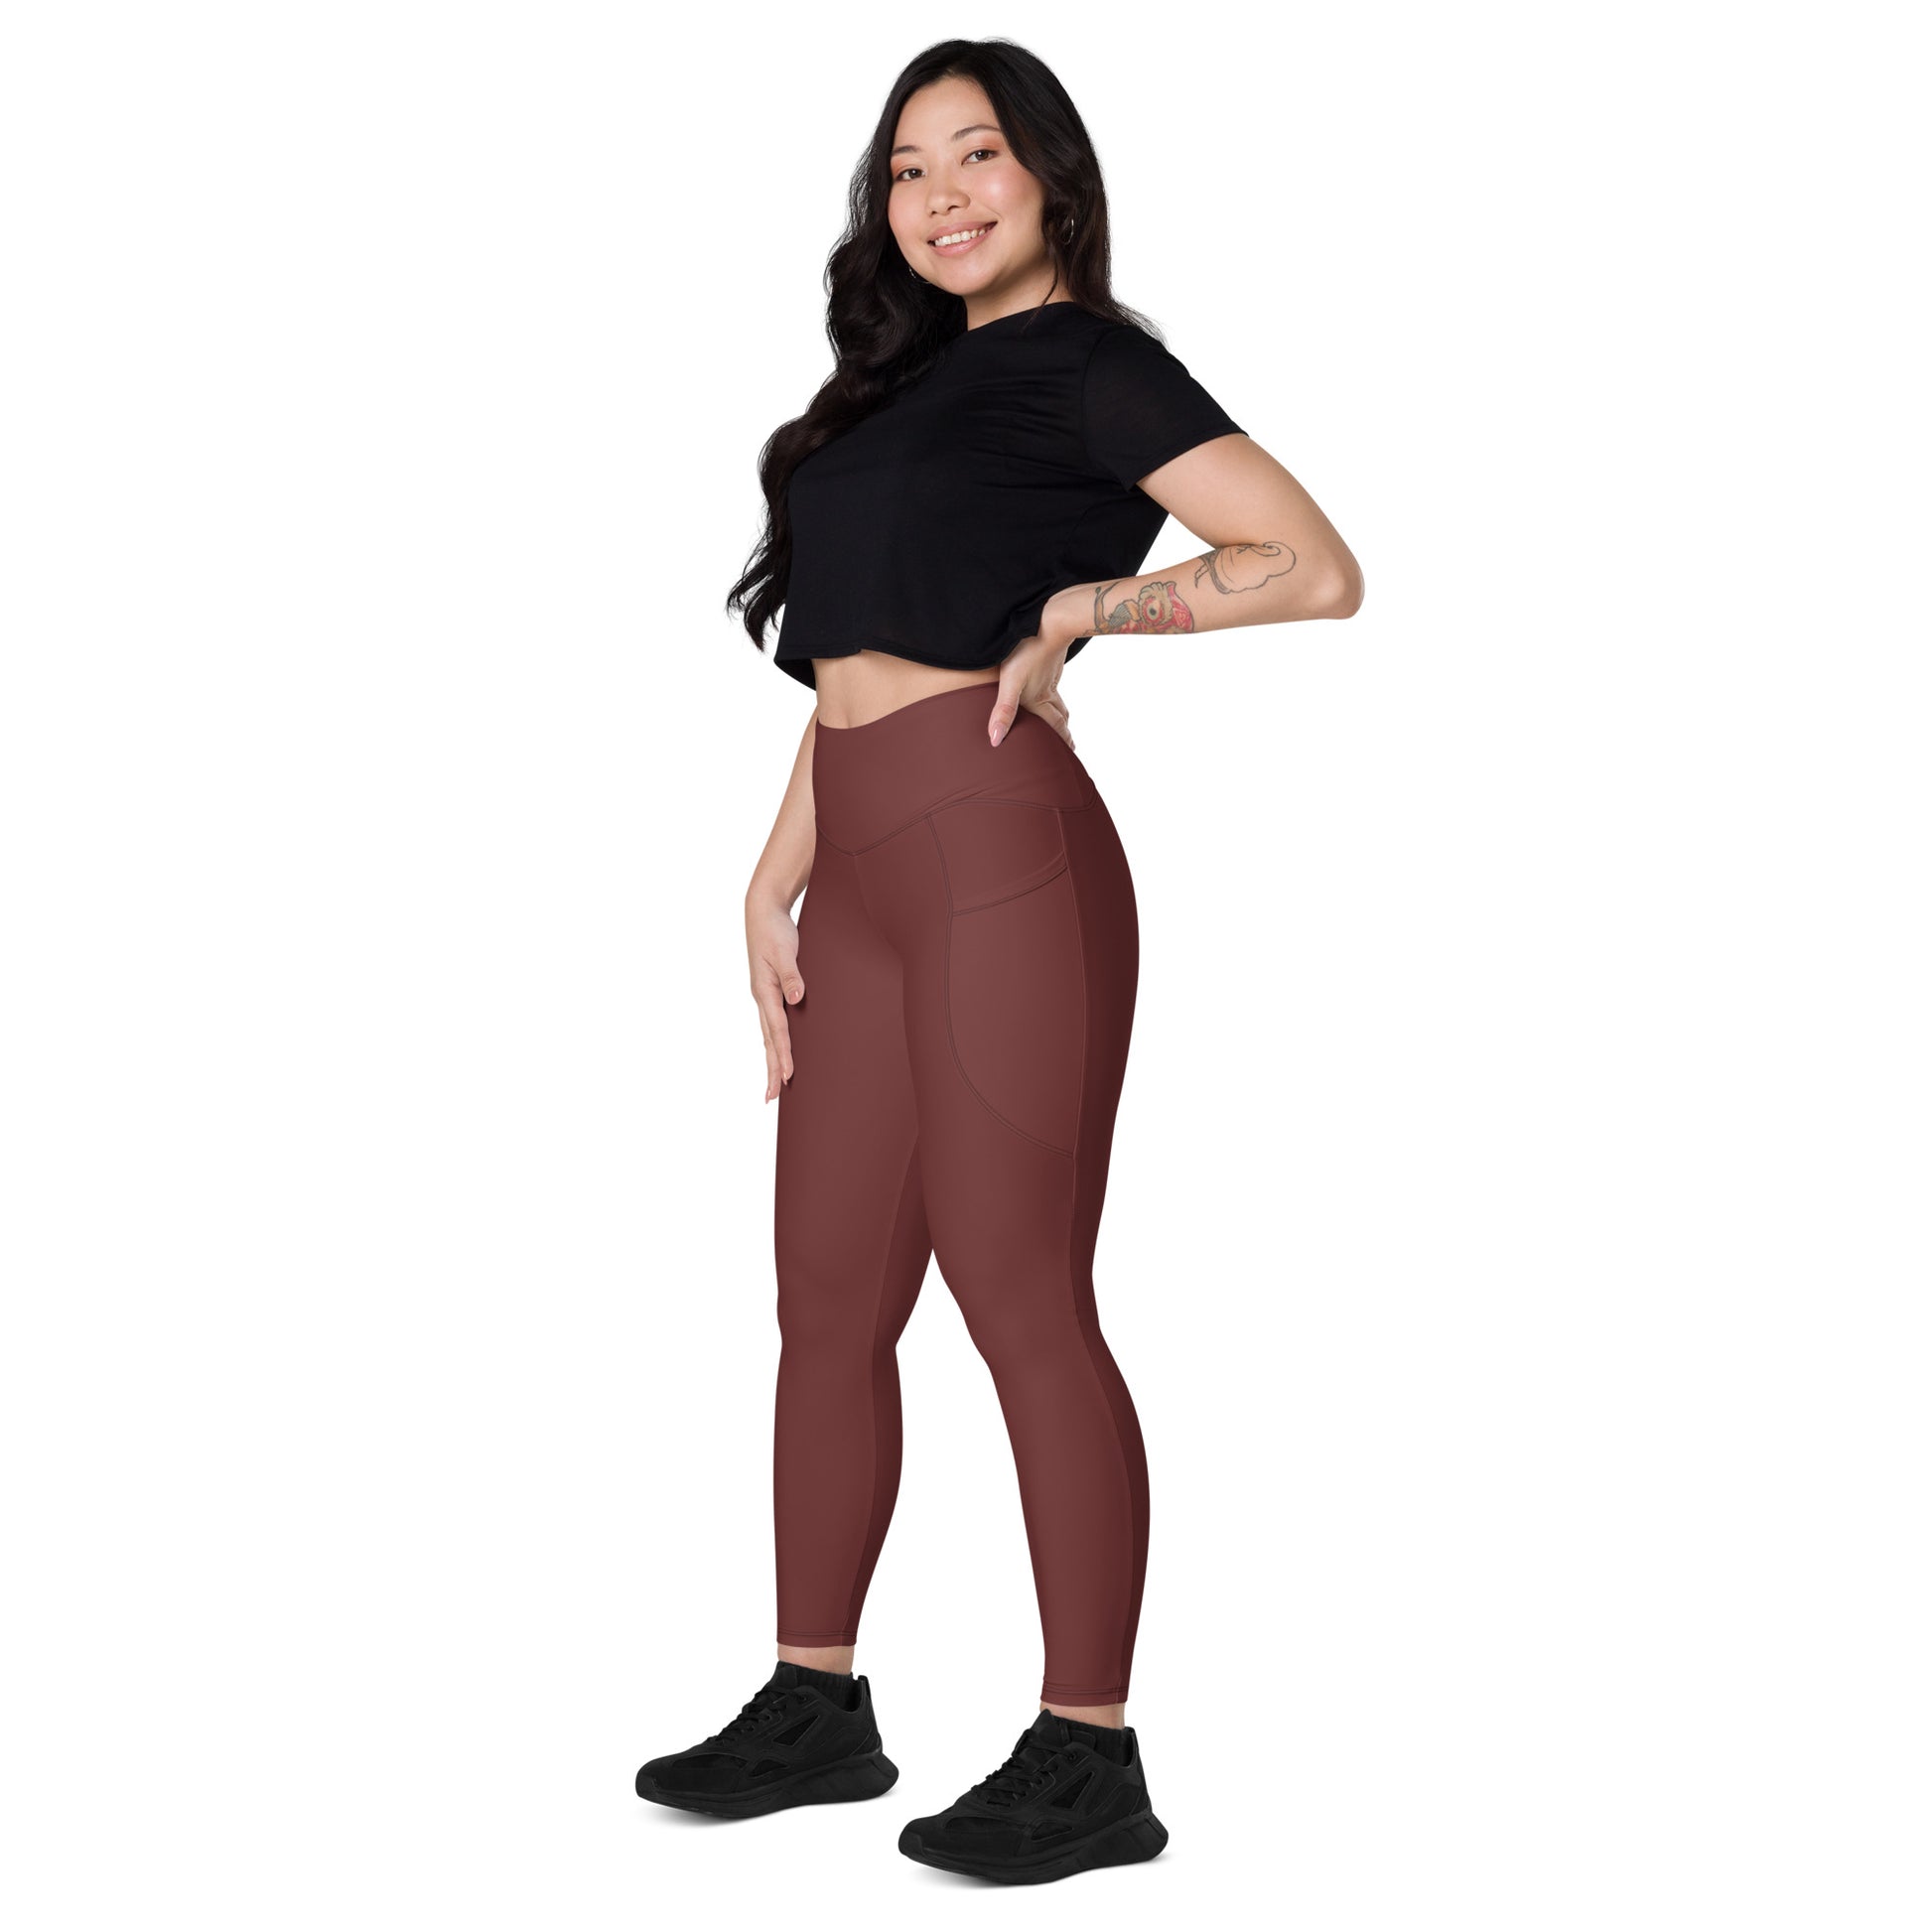 GetUSCart- Fengbay High Waist Yoga Pants with Pockets Yoga Pants